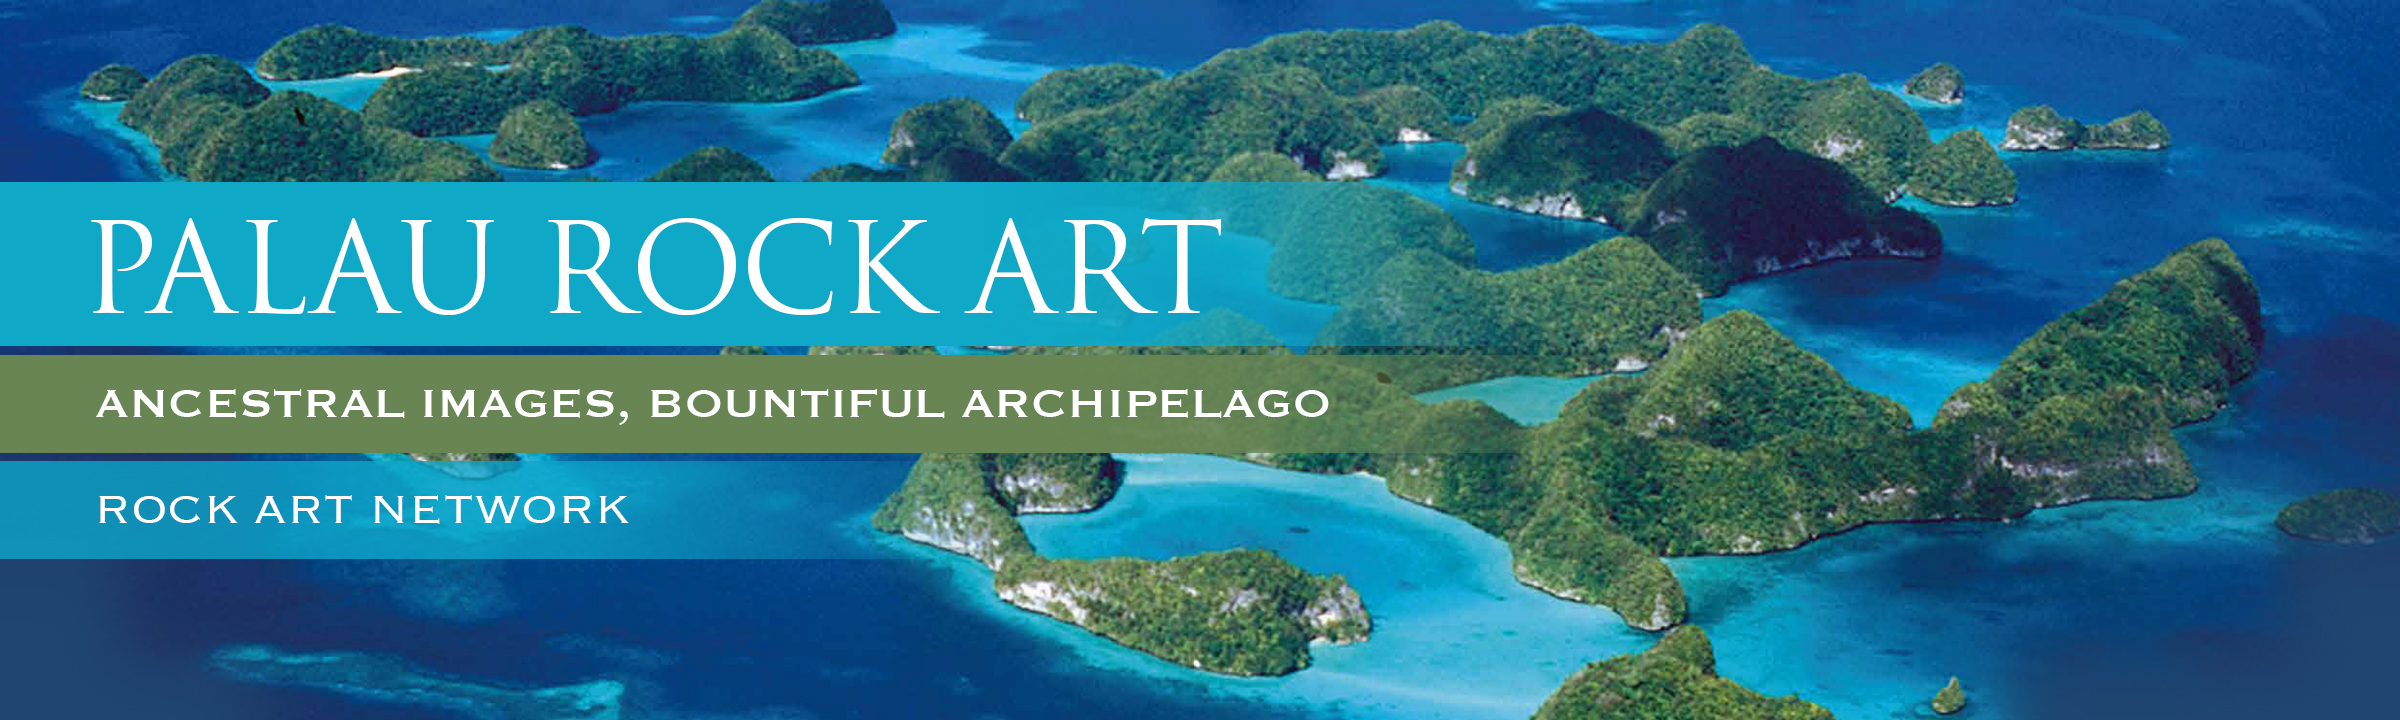 The Rock Art of Palau Micronesia